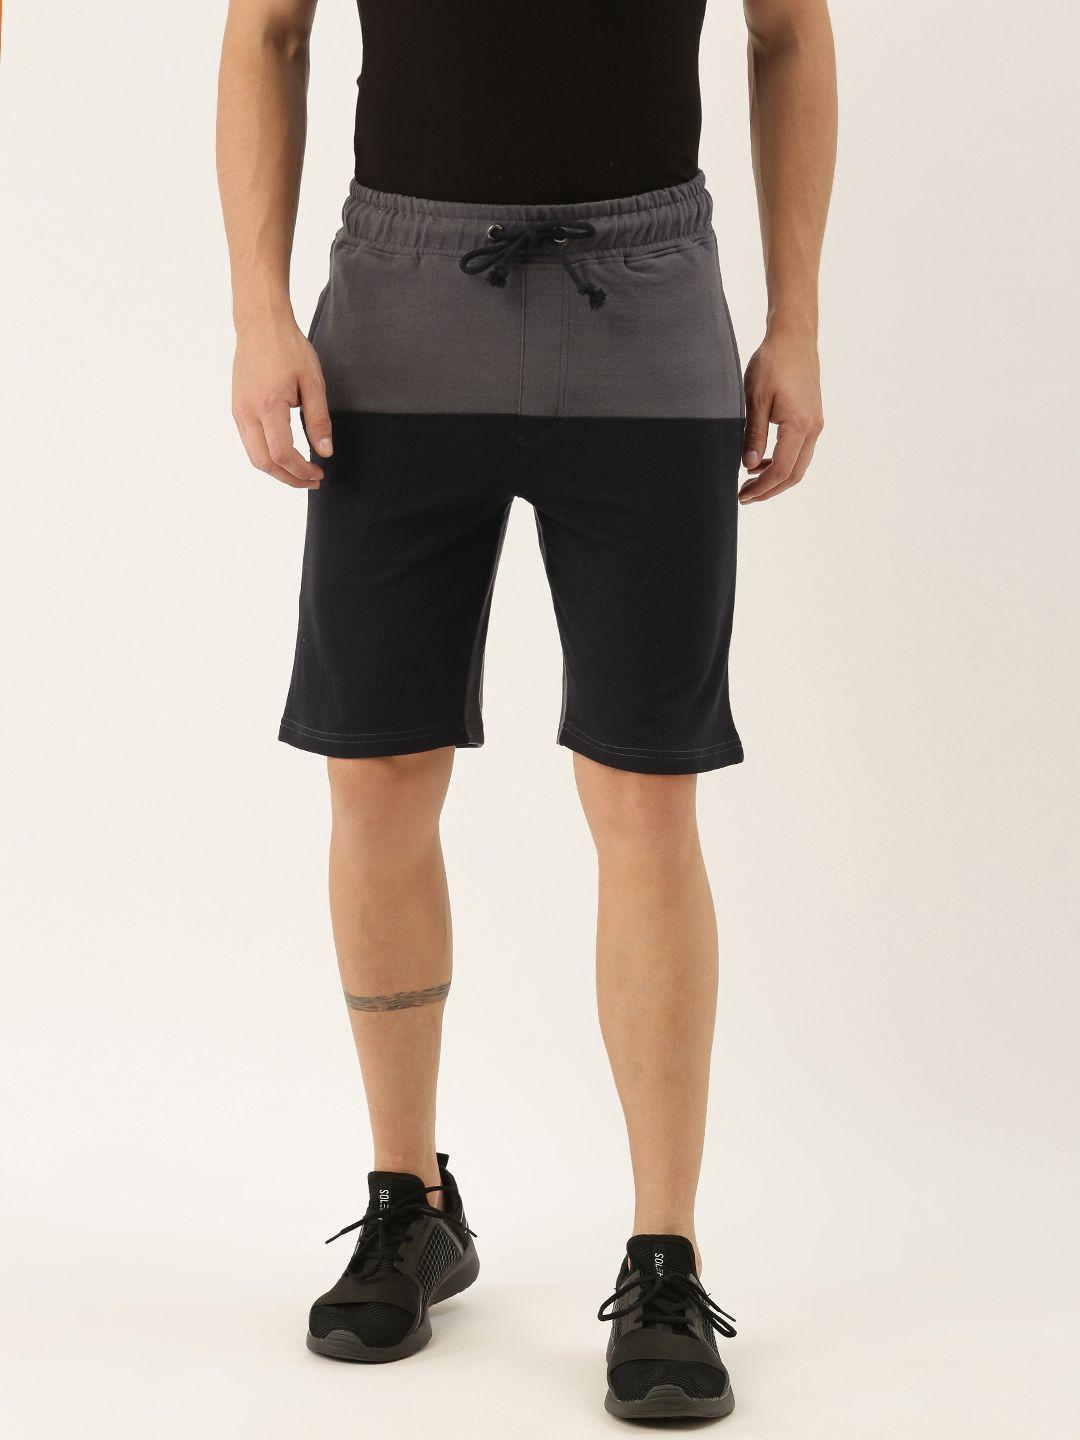 arise men black & charcoal grey colourblocked regular fit regular shorts